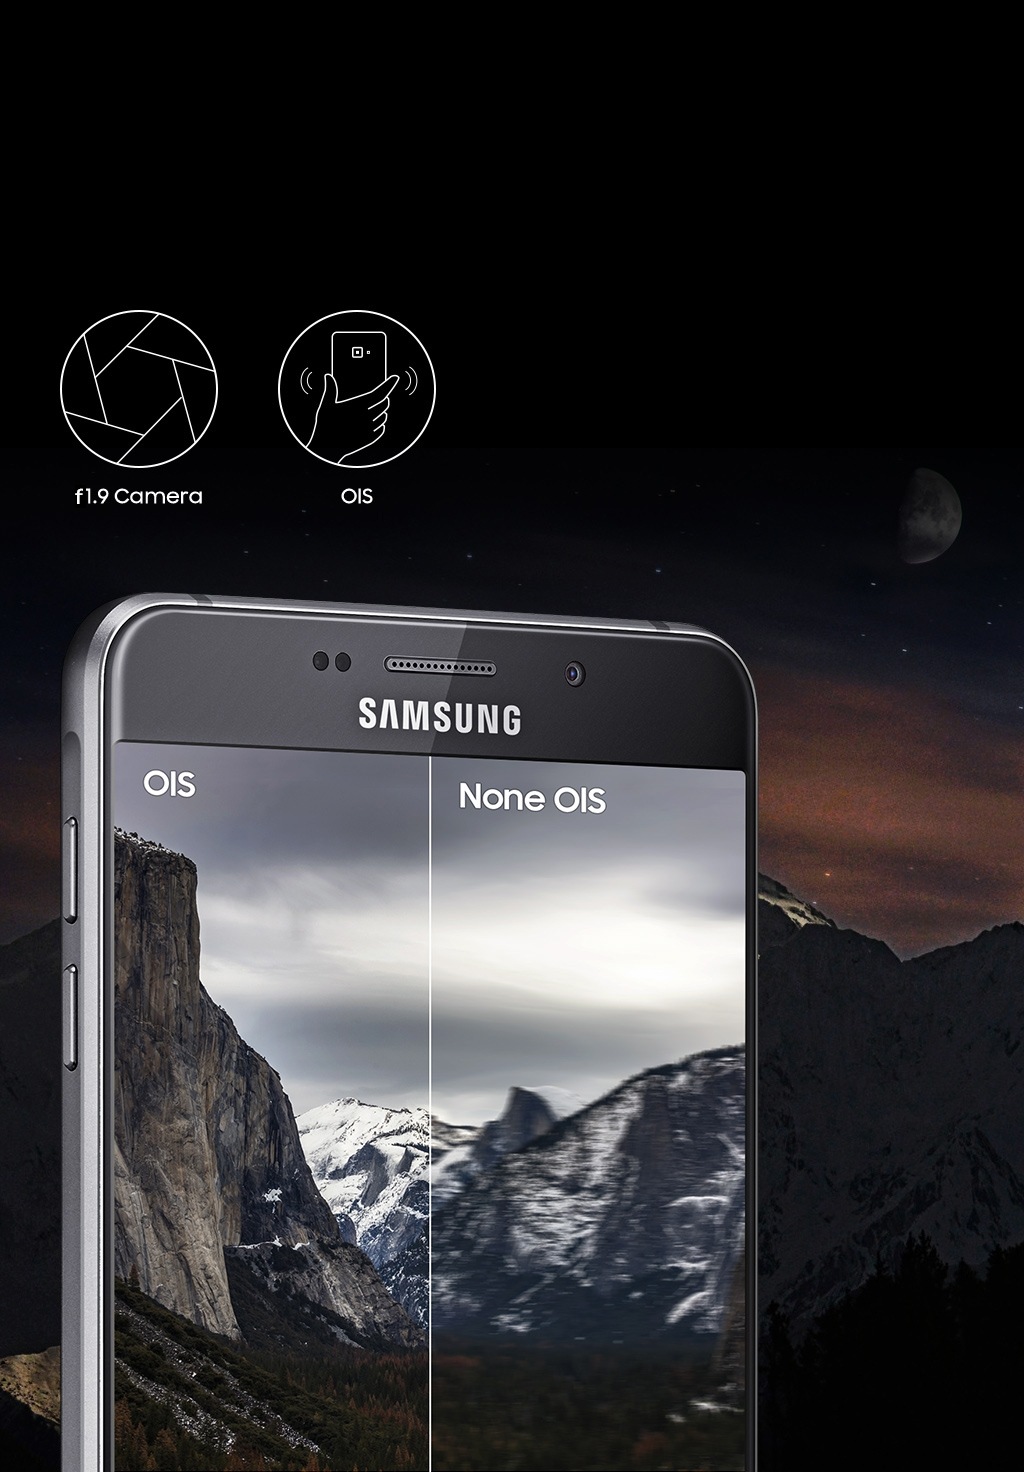 Samsung galaxy a9 pro user manual pdf 2 10